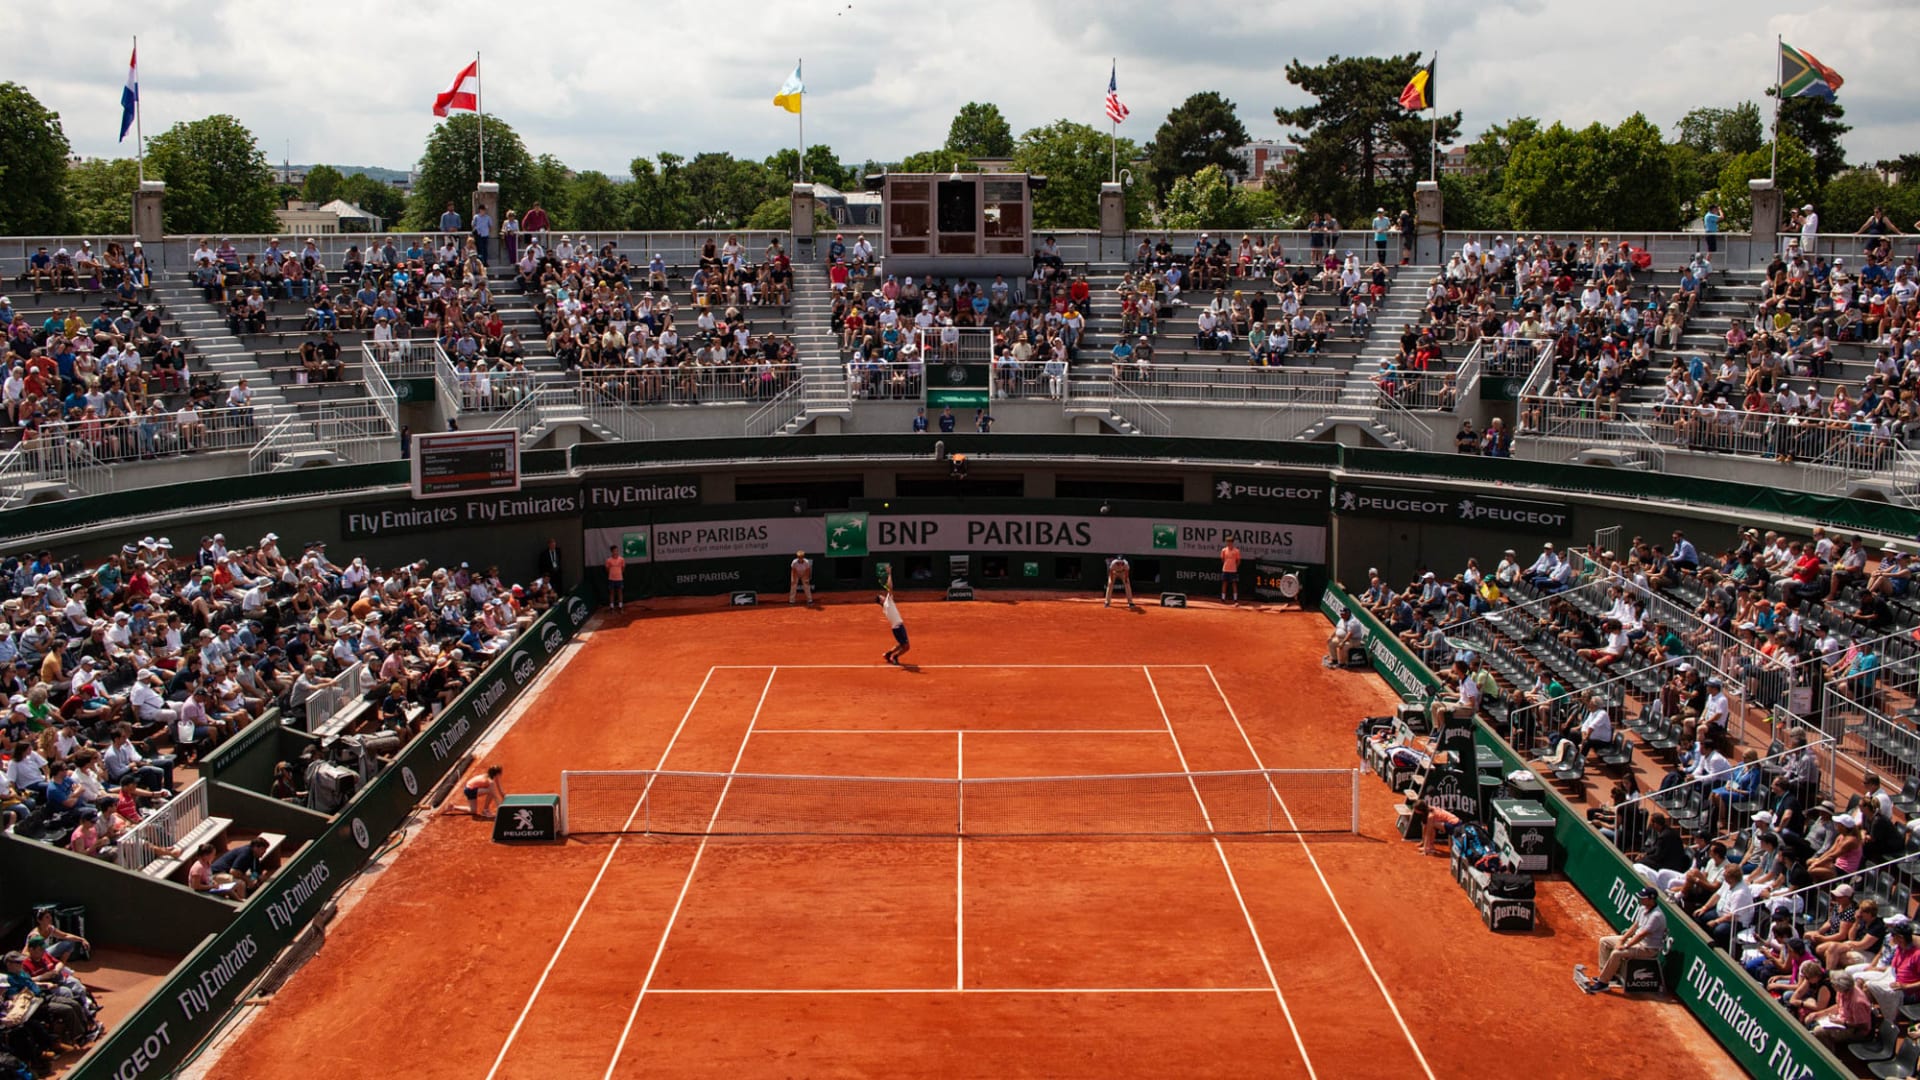 Au Revoir, Court 1 Memorializing Roland Garros exhilarating Bullring